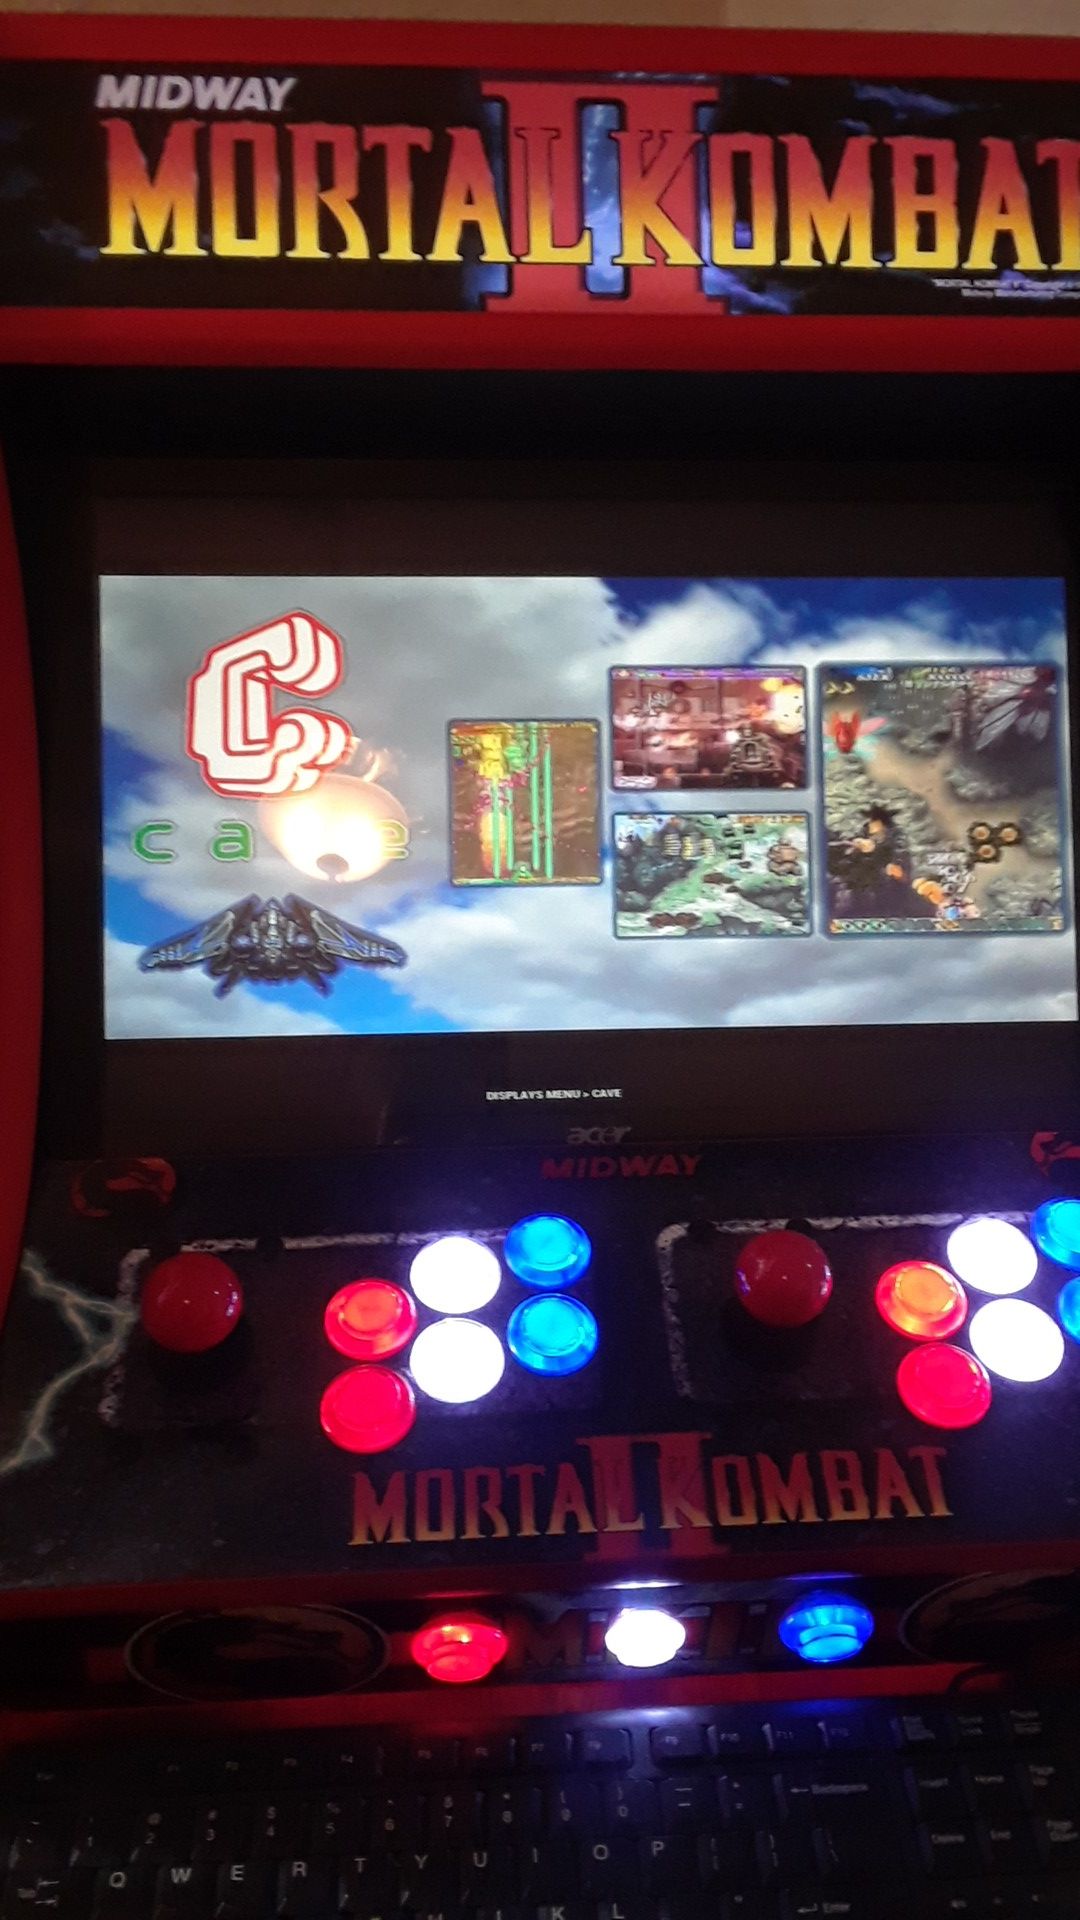 Mortal kombat bartop arcade play over 16,000 games